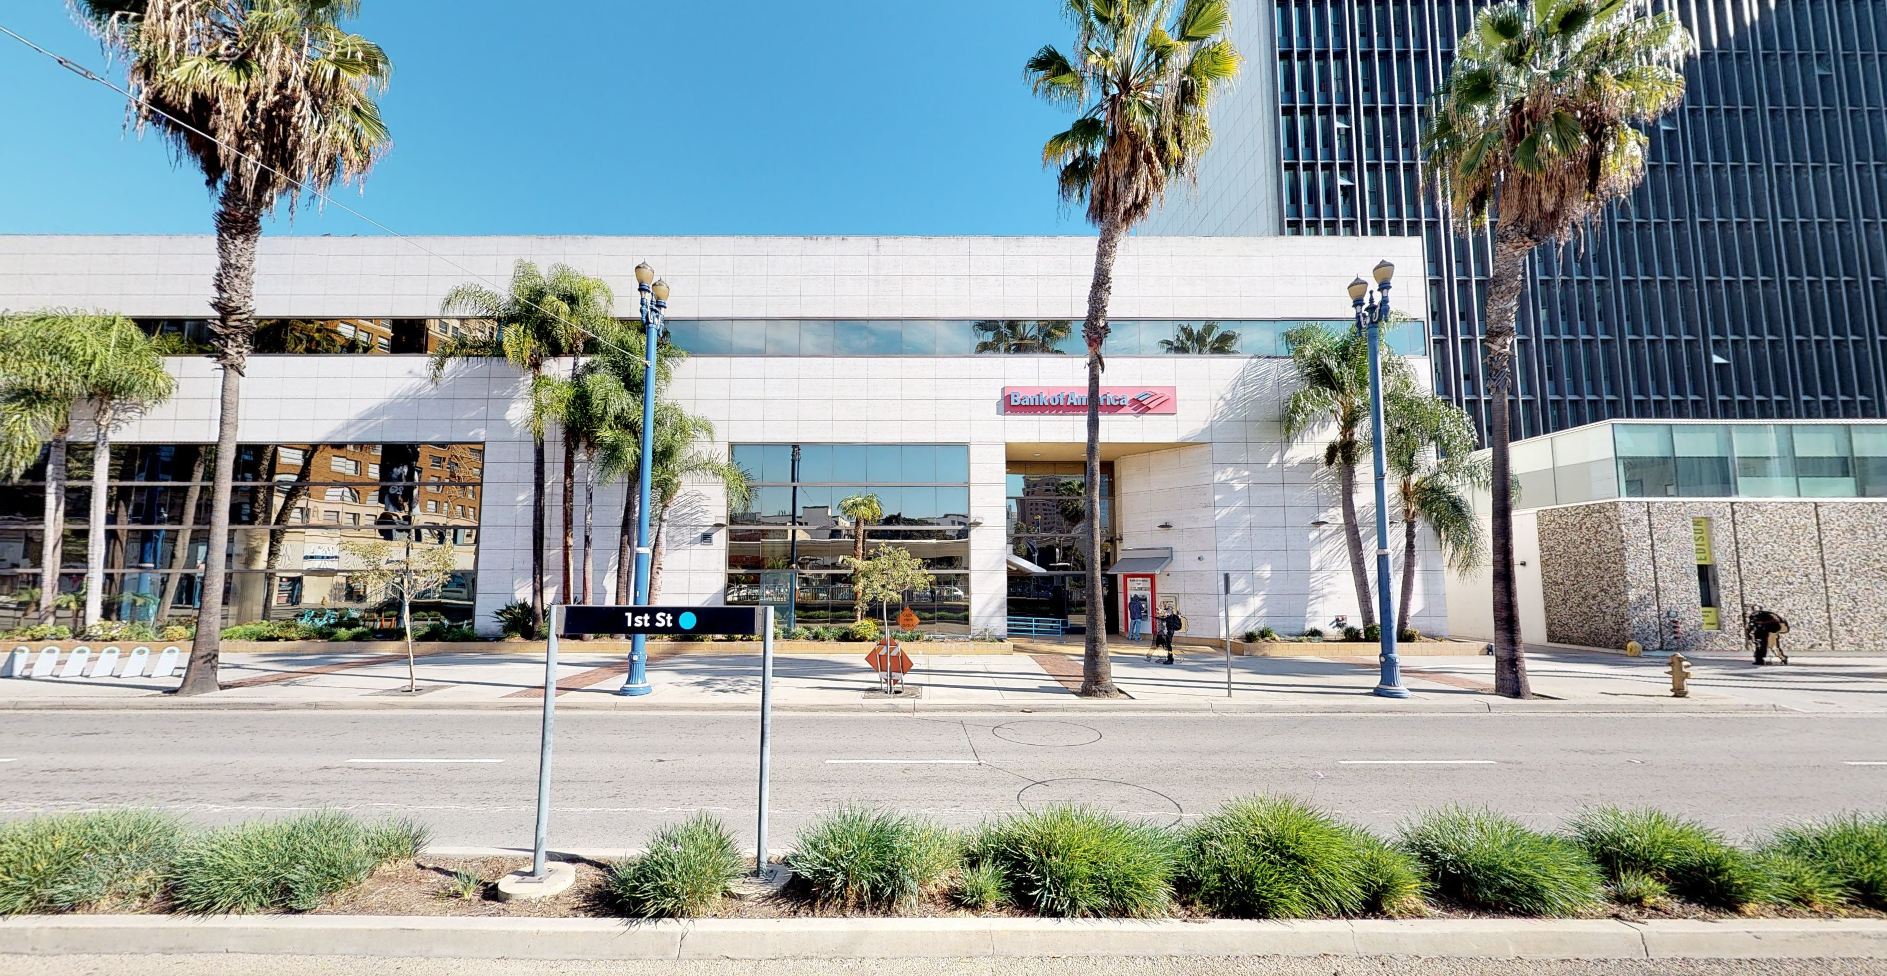 Bank of America financial center with walk-up ATM | 150 Long Beach Blvd, Long Beach, CA 90802